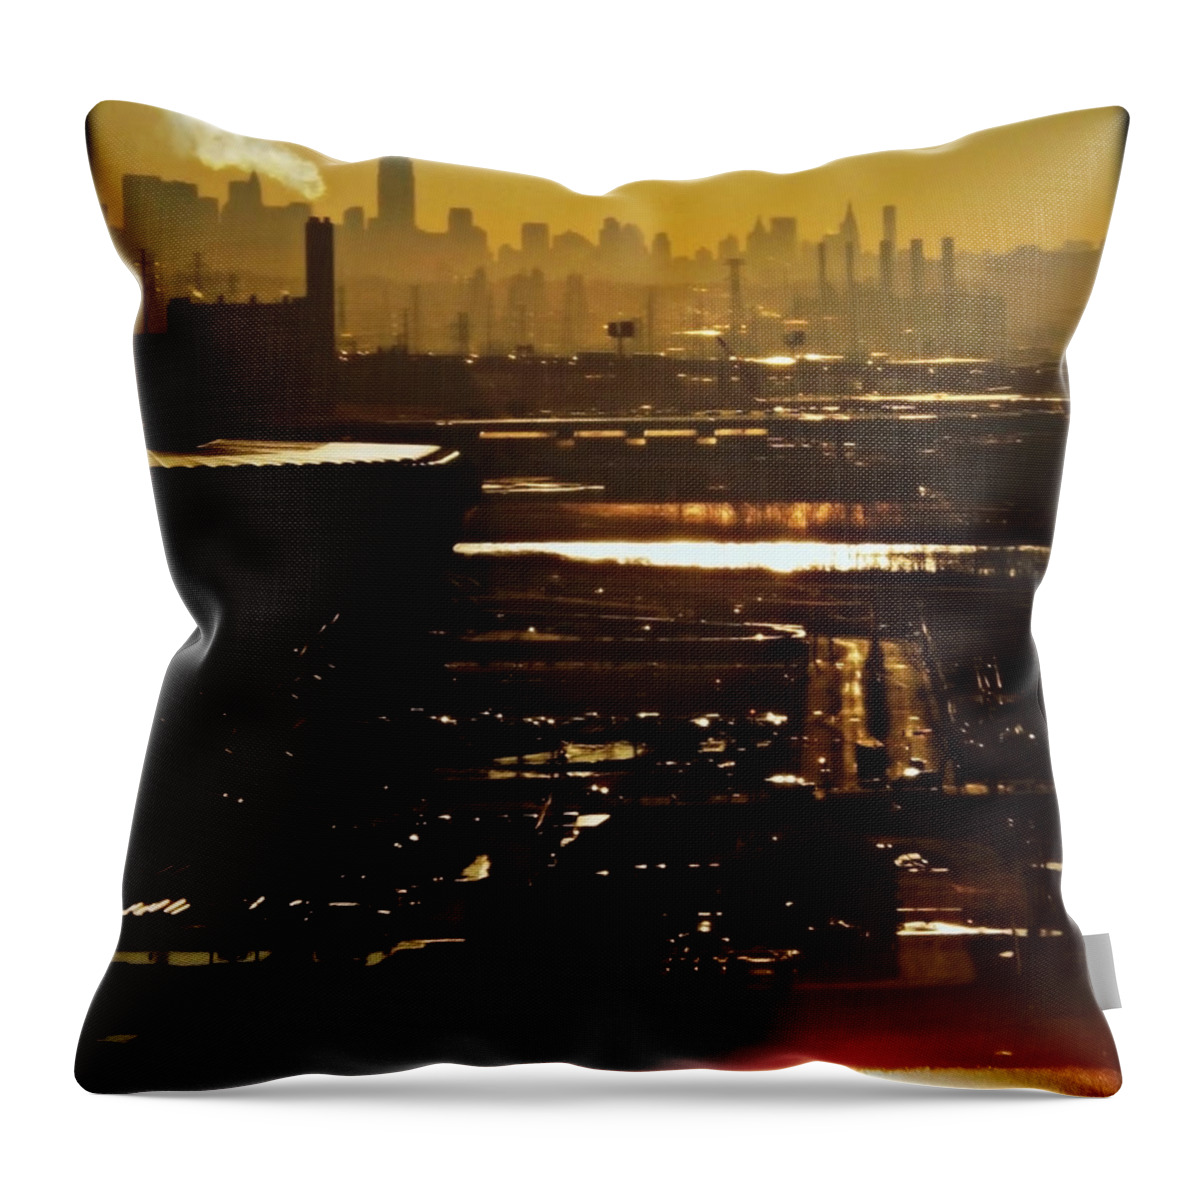 New York City Throw Pillow featuring the photograph An Imposing Skyline by James Aiken